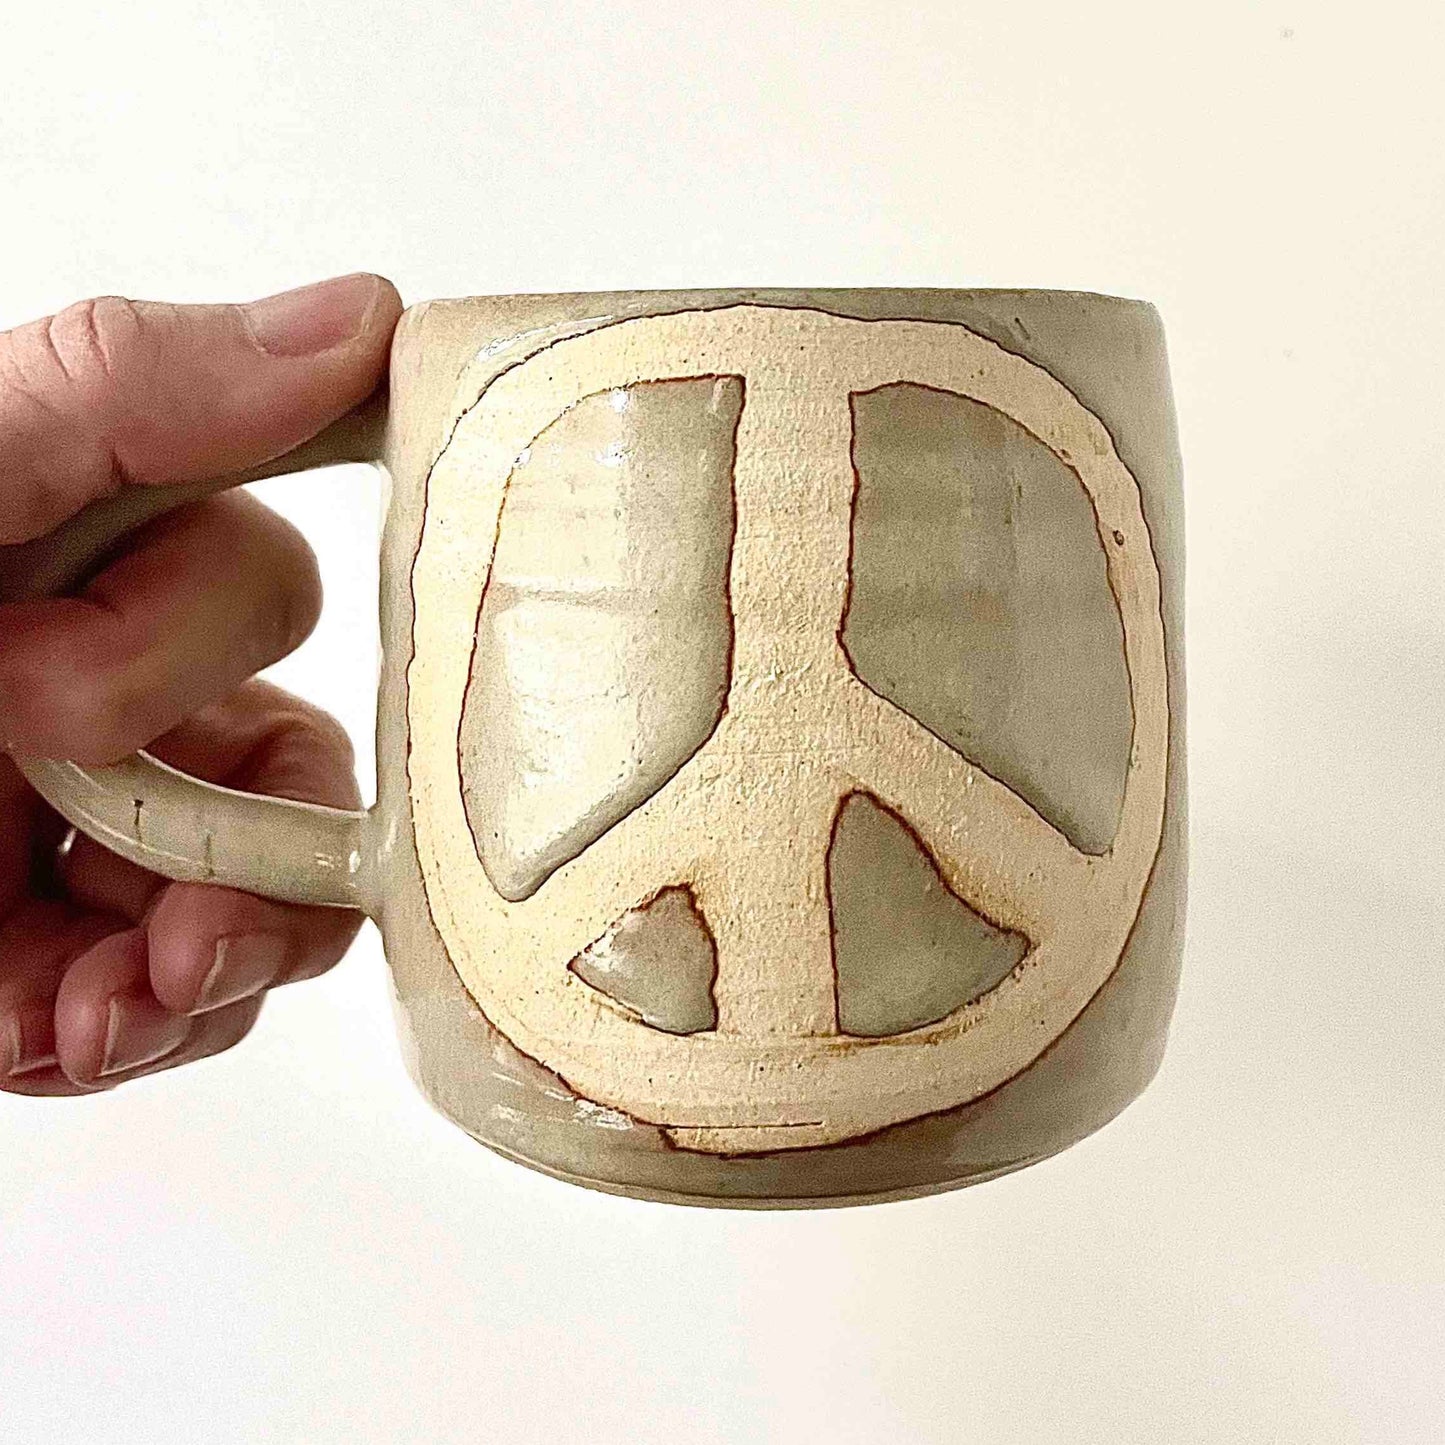 off-white glossy mug with peace symbol